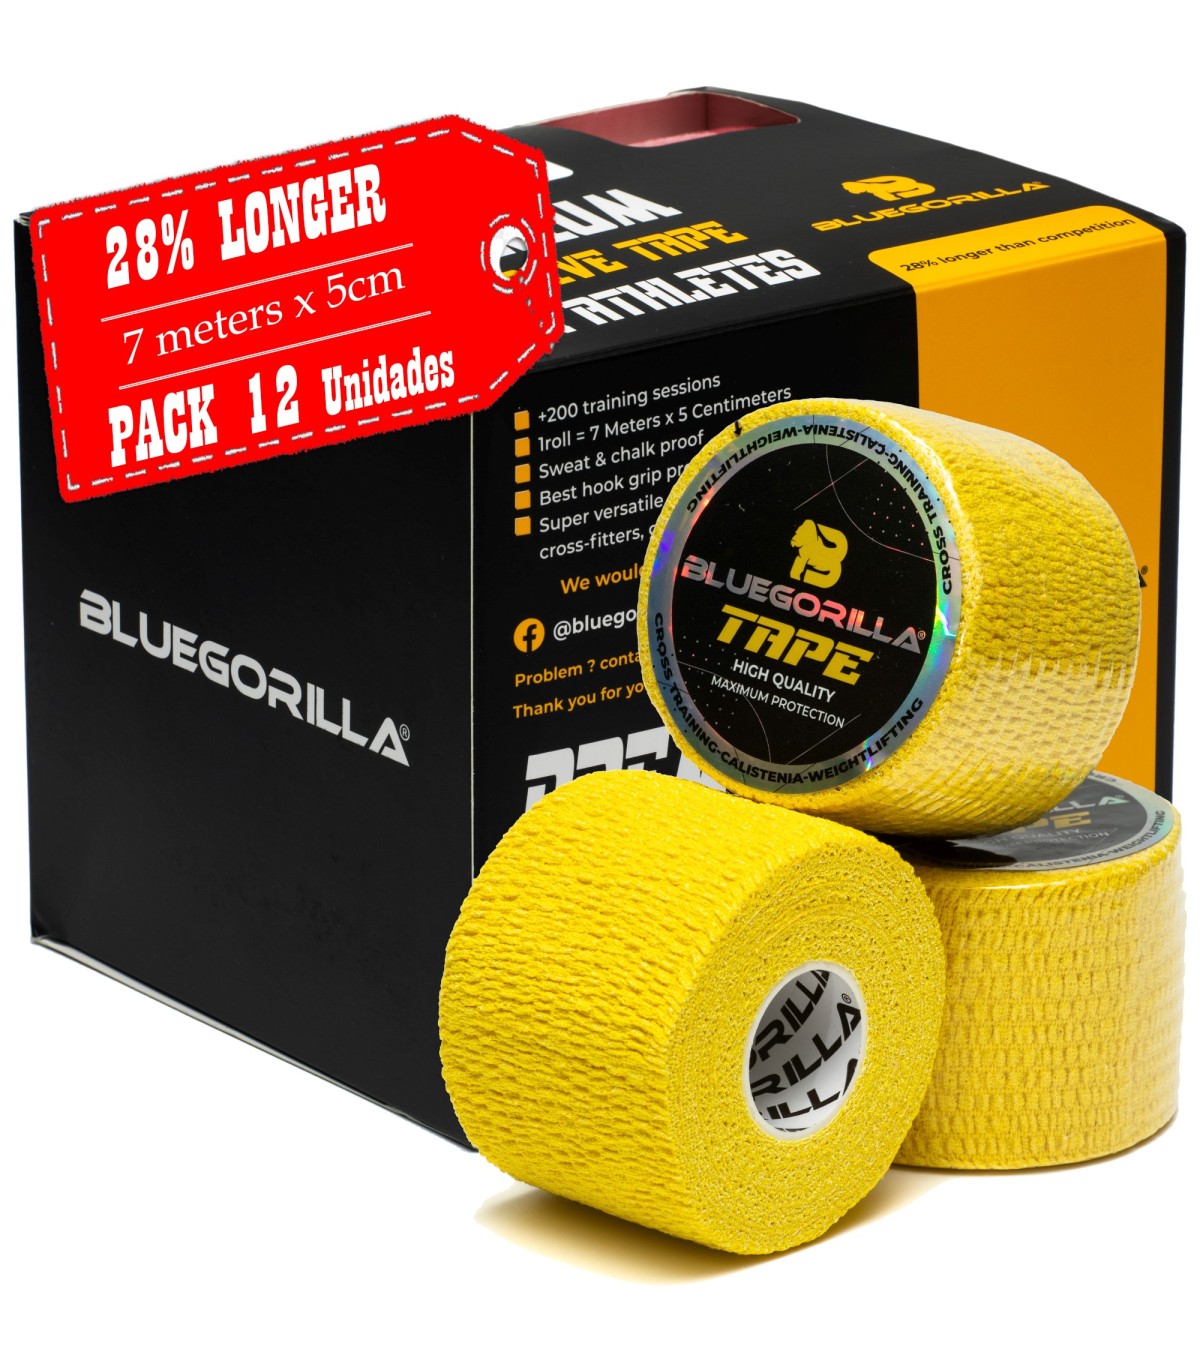 Tapes premium CrossTraining-Weightlifting BLUEGORILLA®